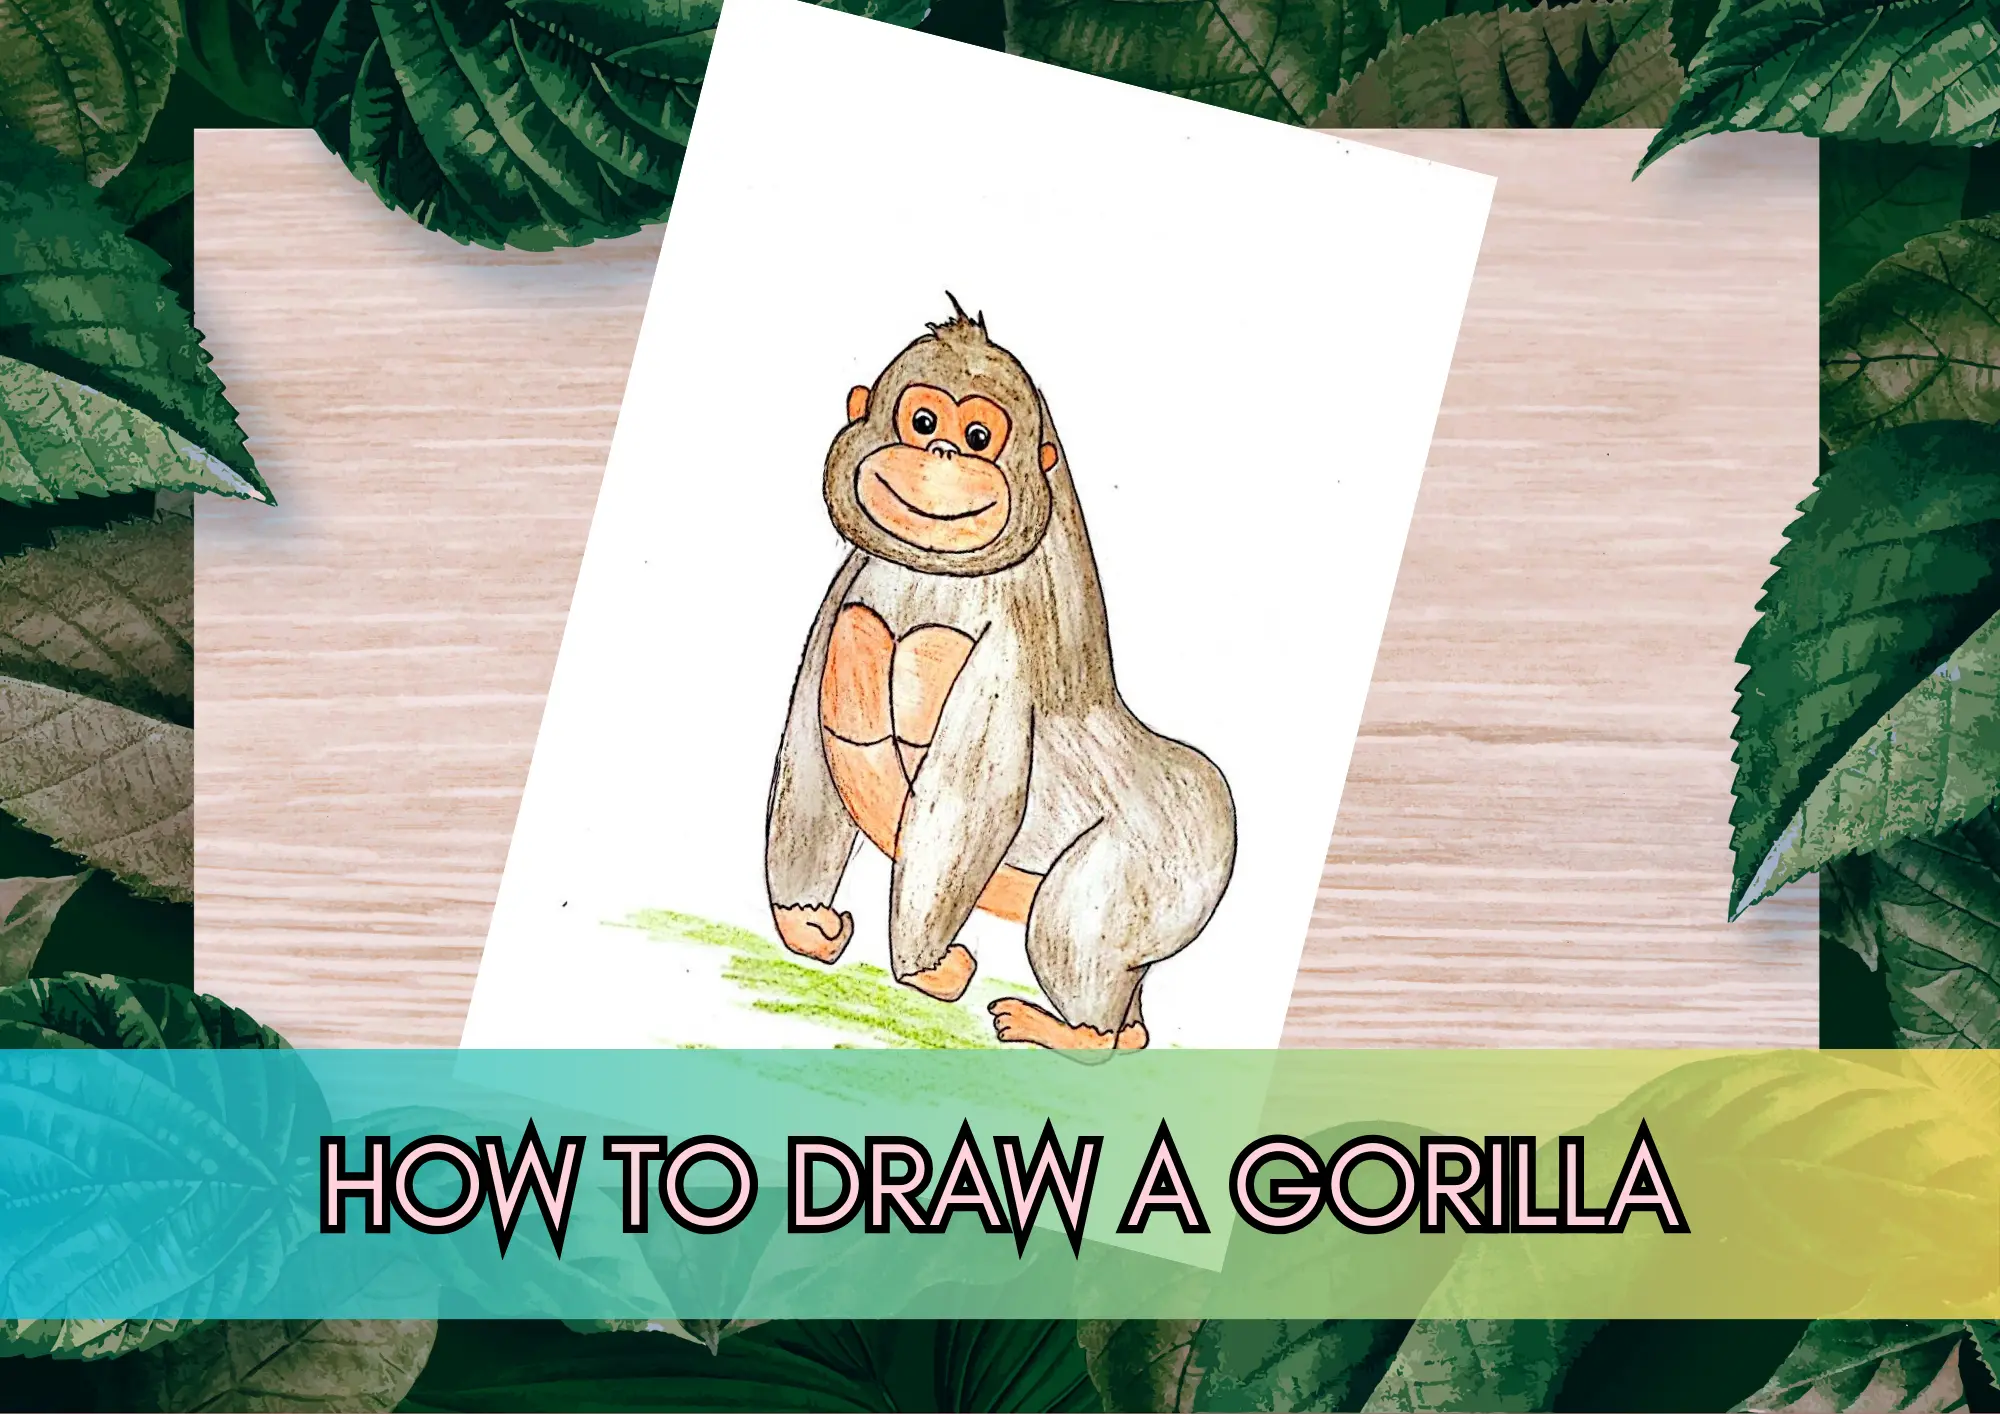 King kong 🦍 Drawing,Painting and Coloring for kids and toddlers | Draw  king kong #kingkong #gorilla - YouTube